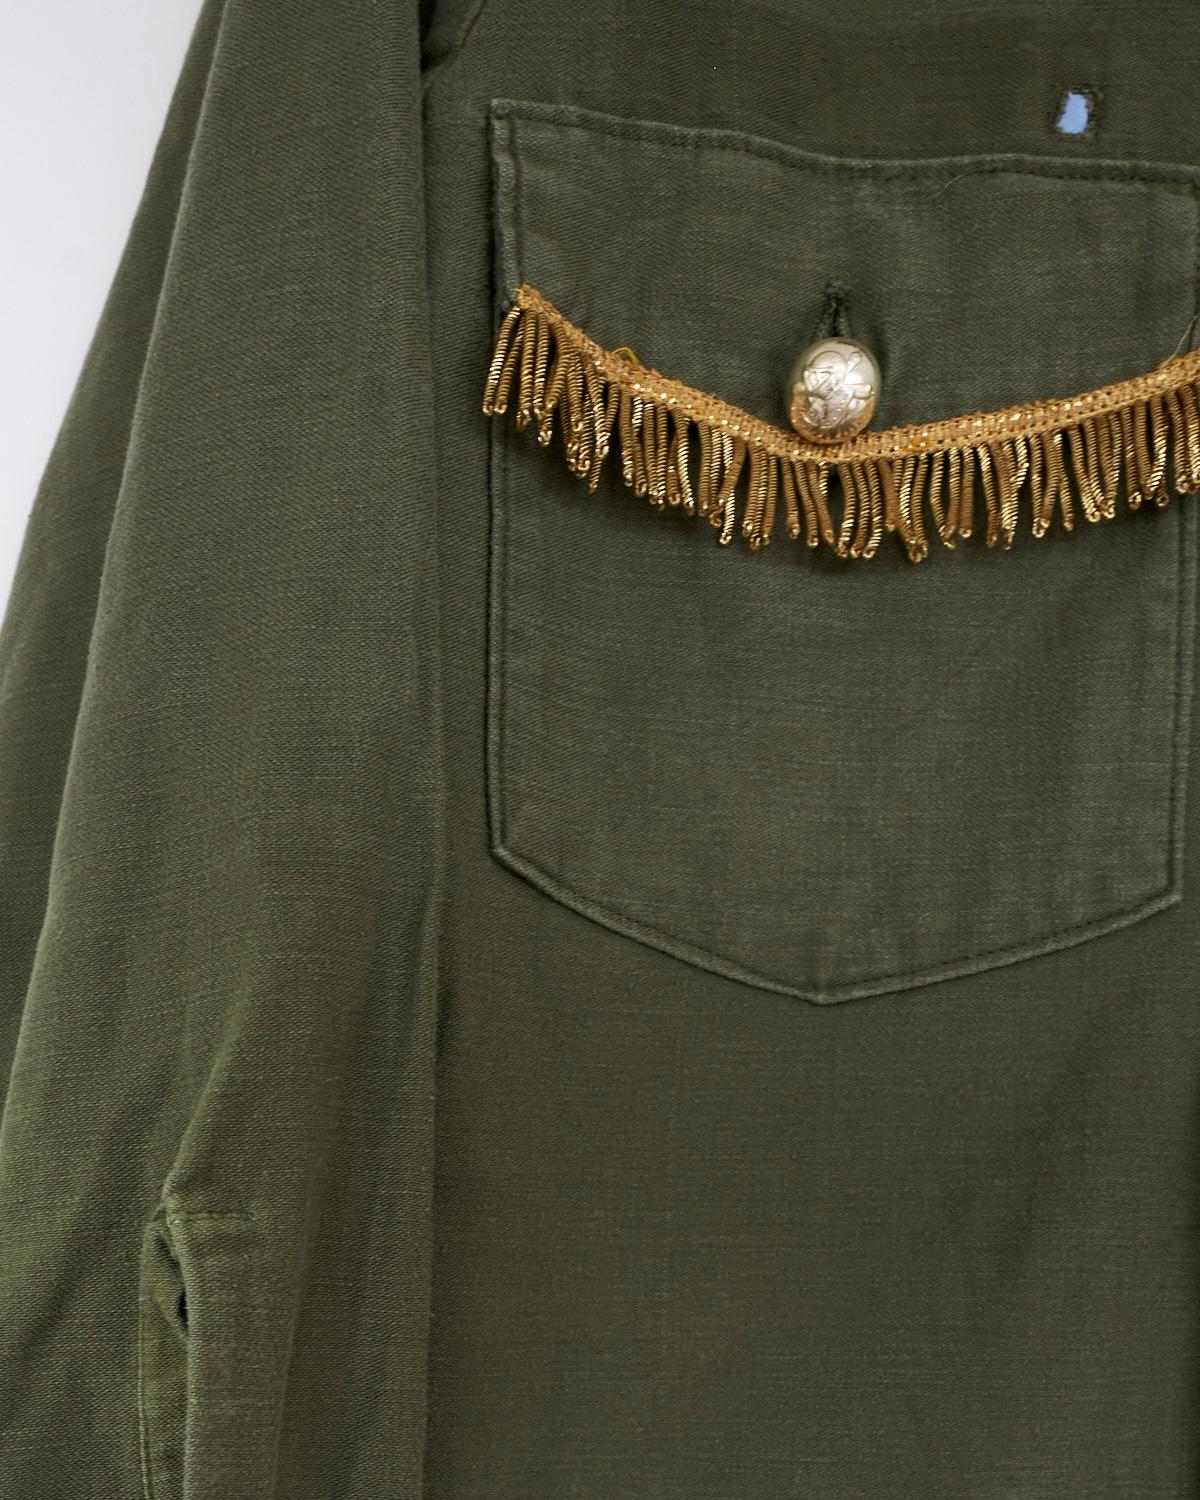 Fringe Embellished Jacket Cropped Tweed Military Green Gold Buttons J Dauphin 1